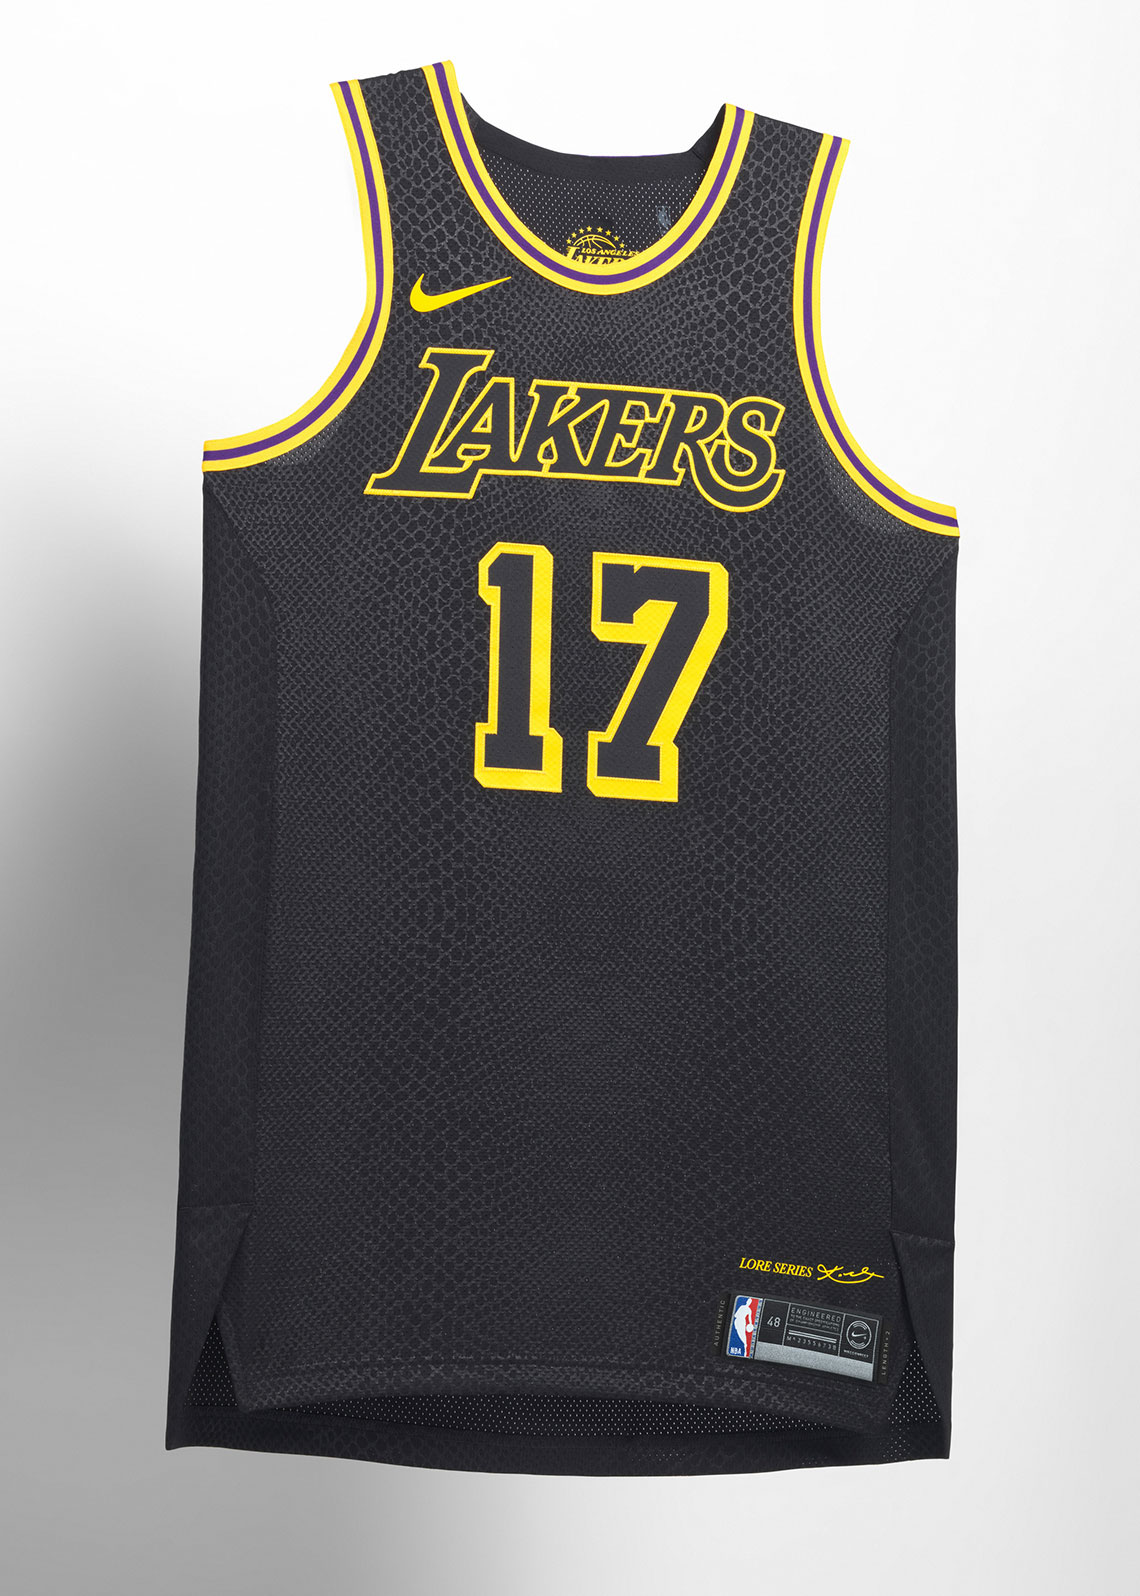 Nba City Edition Uniforms Los Angeles Lakers